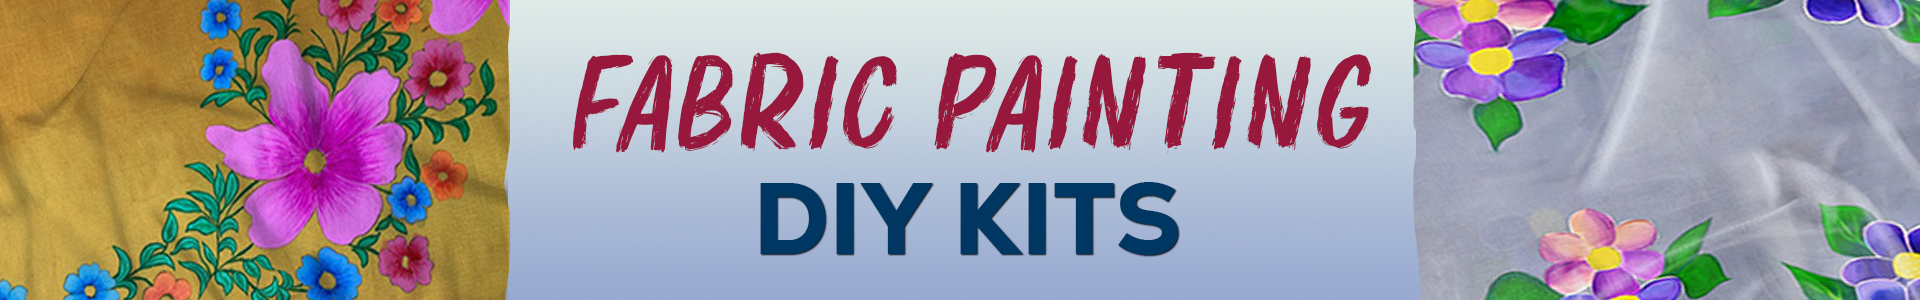 Fabric Painting Diy Kits